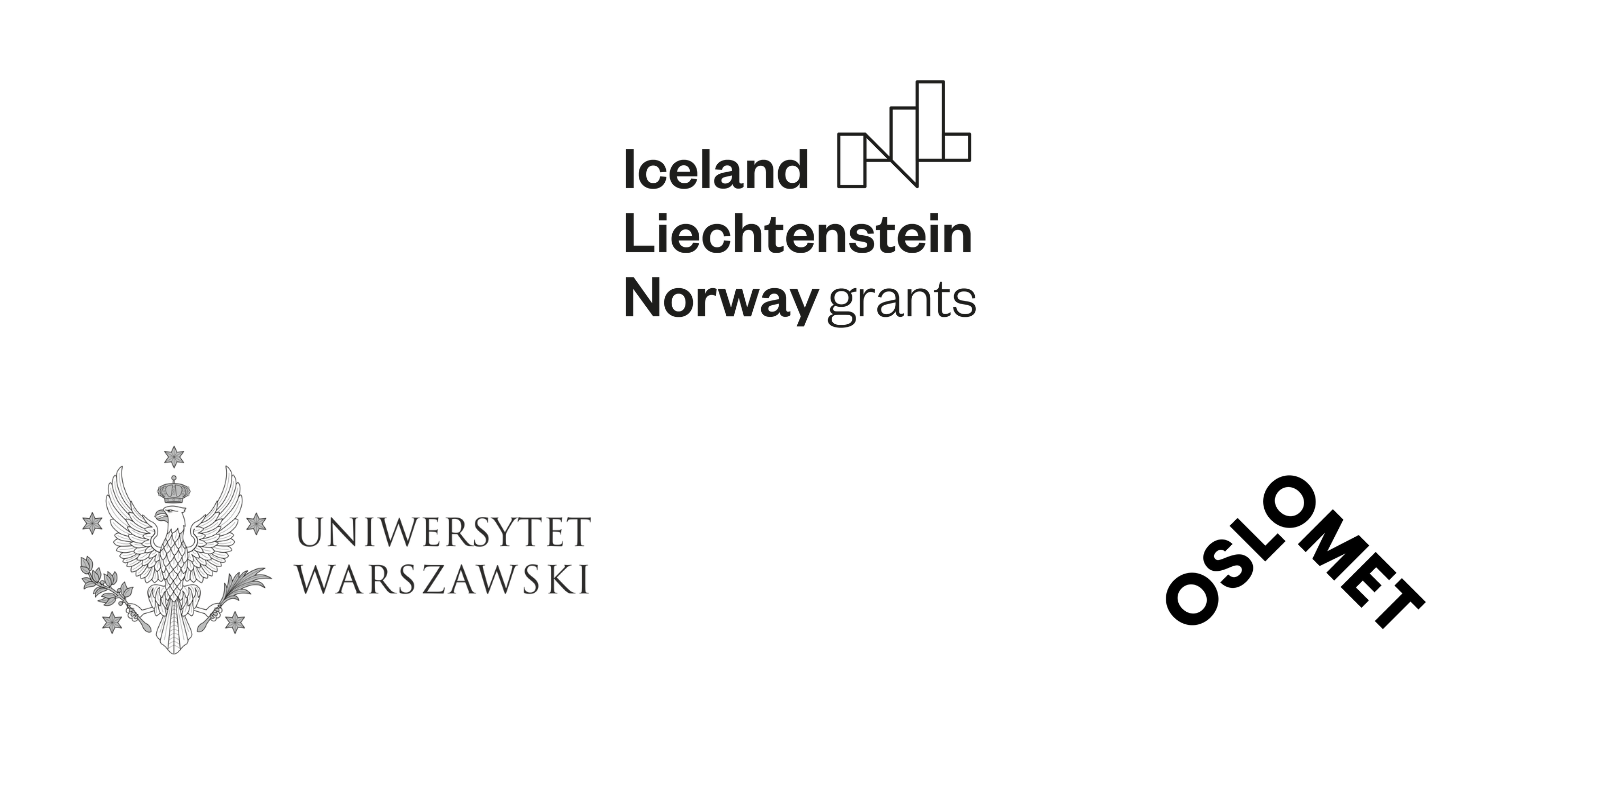 EEA, University of Warsaw and Oslo Metropolitan University logos